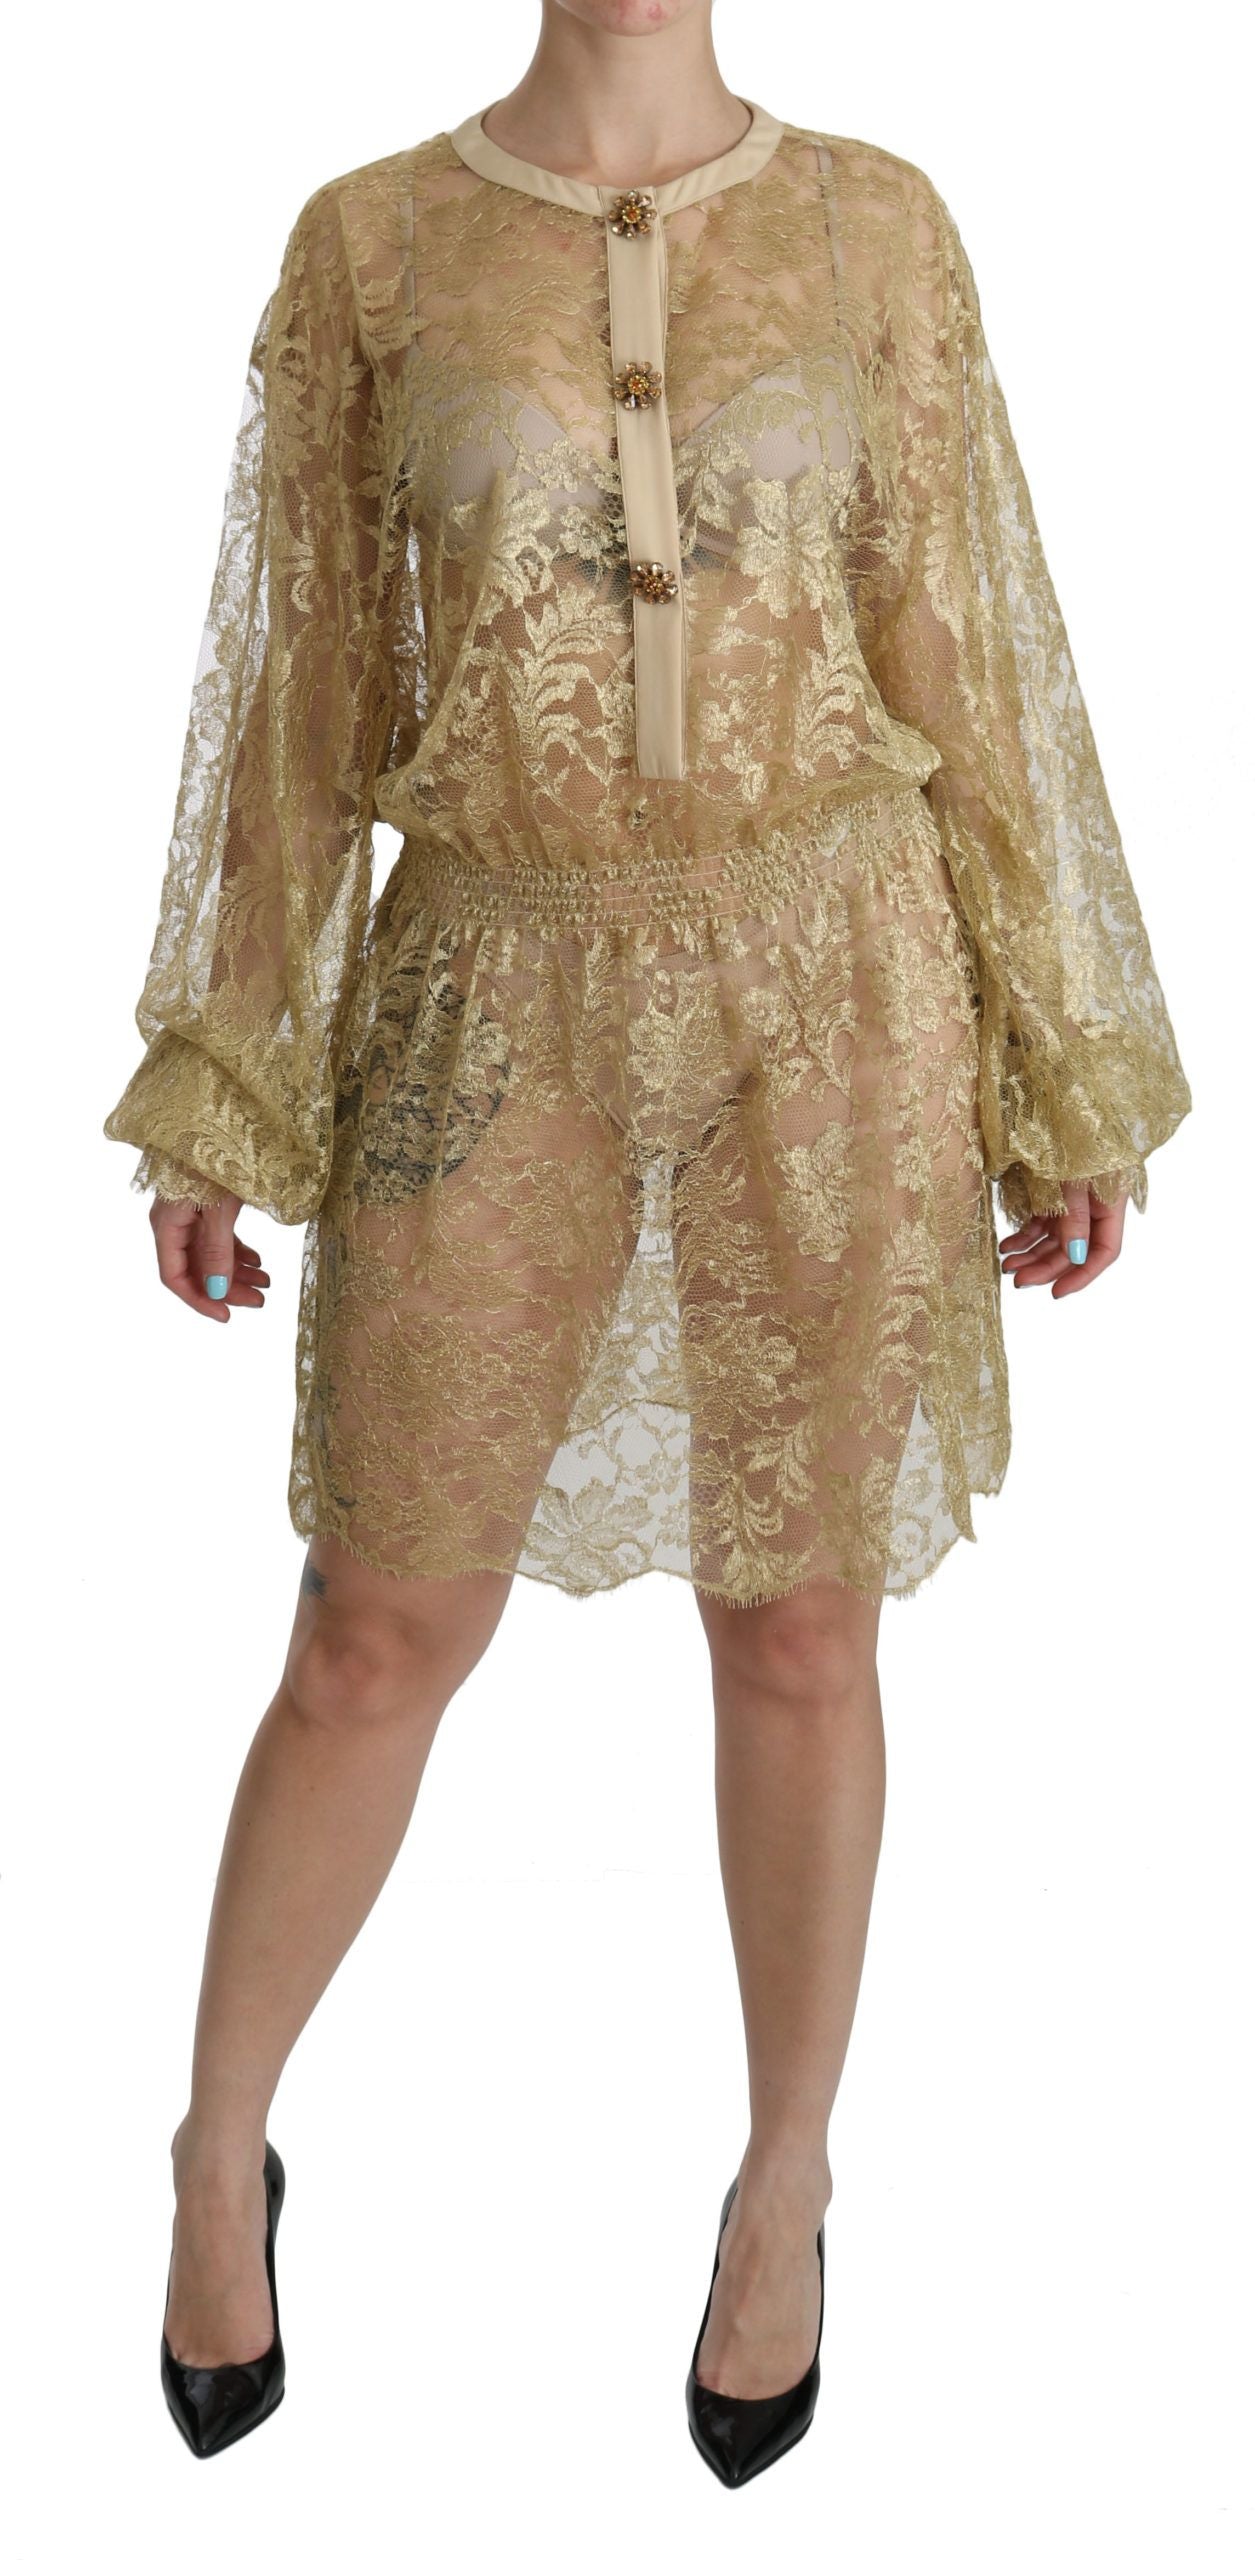 Elegant Gold Lace A-Line Knee Length Dress